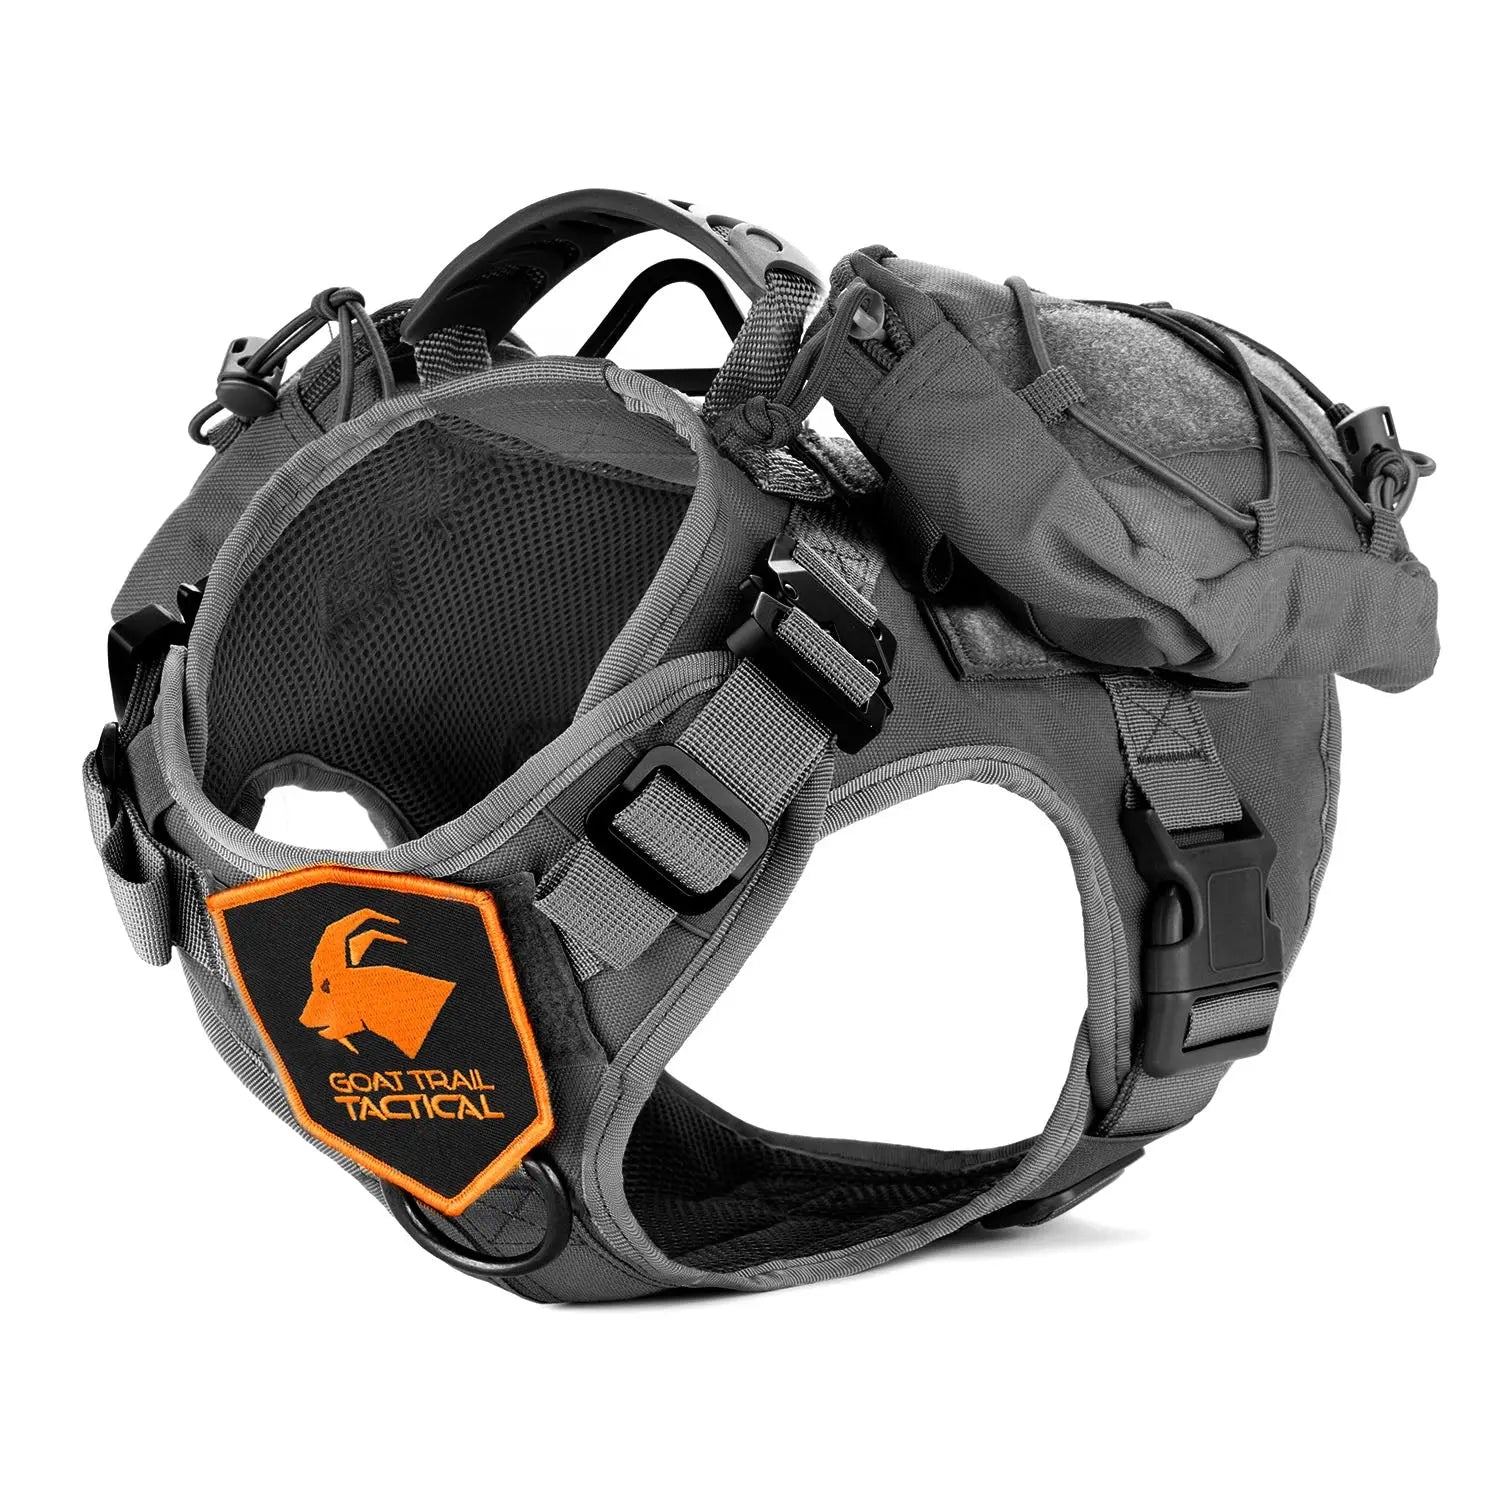 SSGLex Dog/K9 Harness + Detachable Backpack Goat Trail Tactical